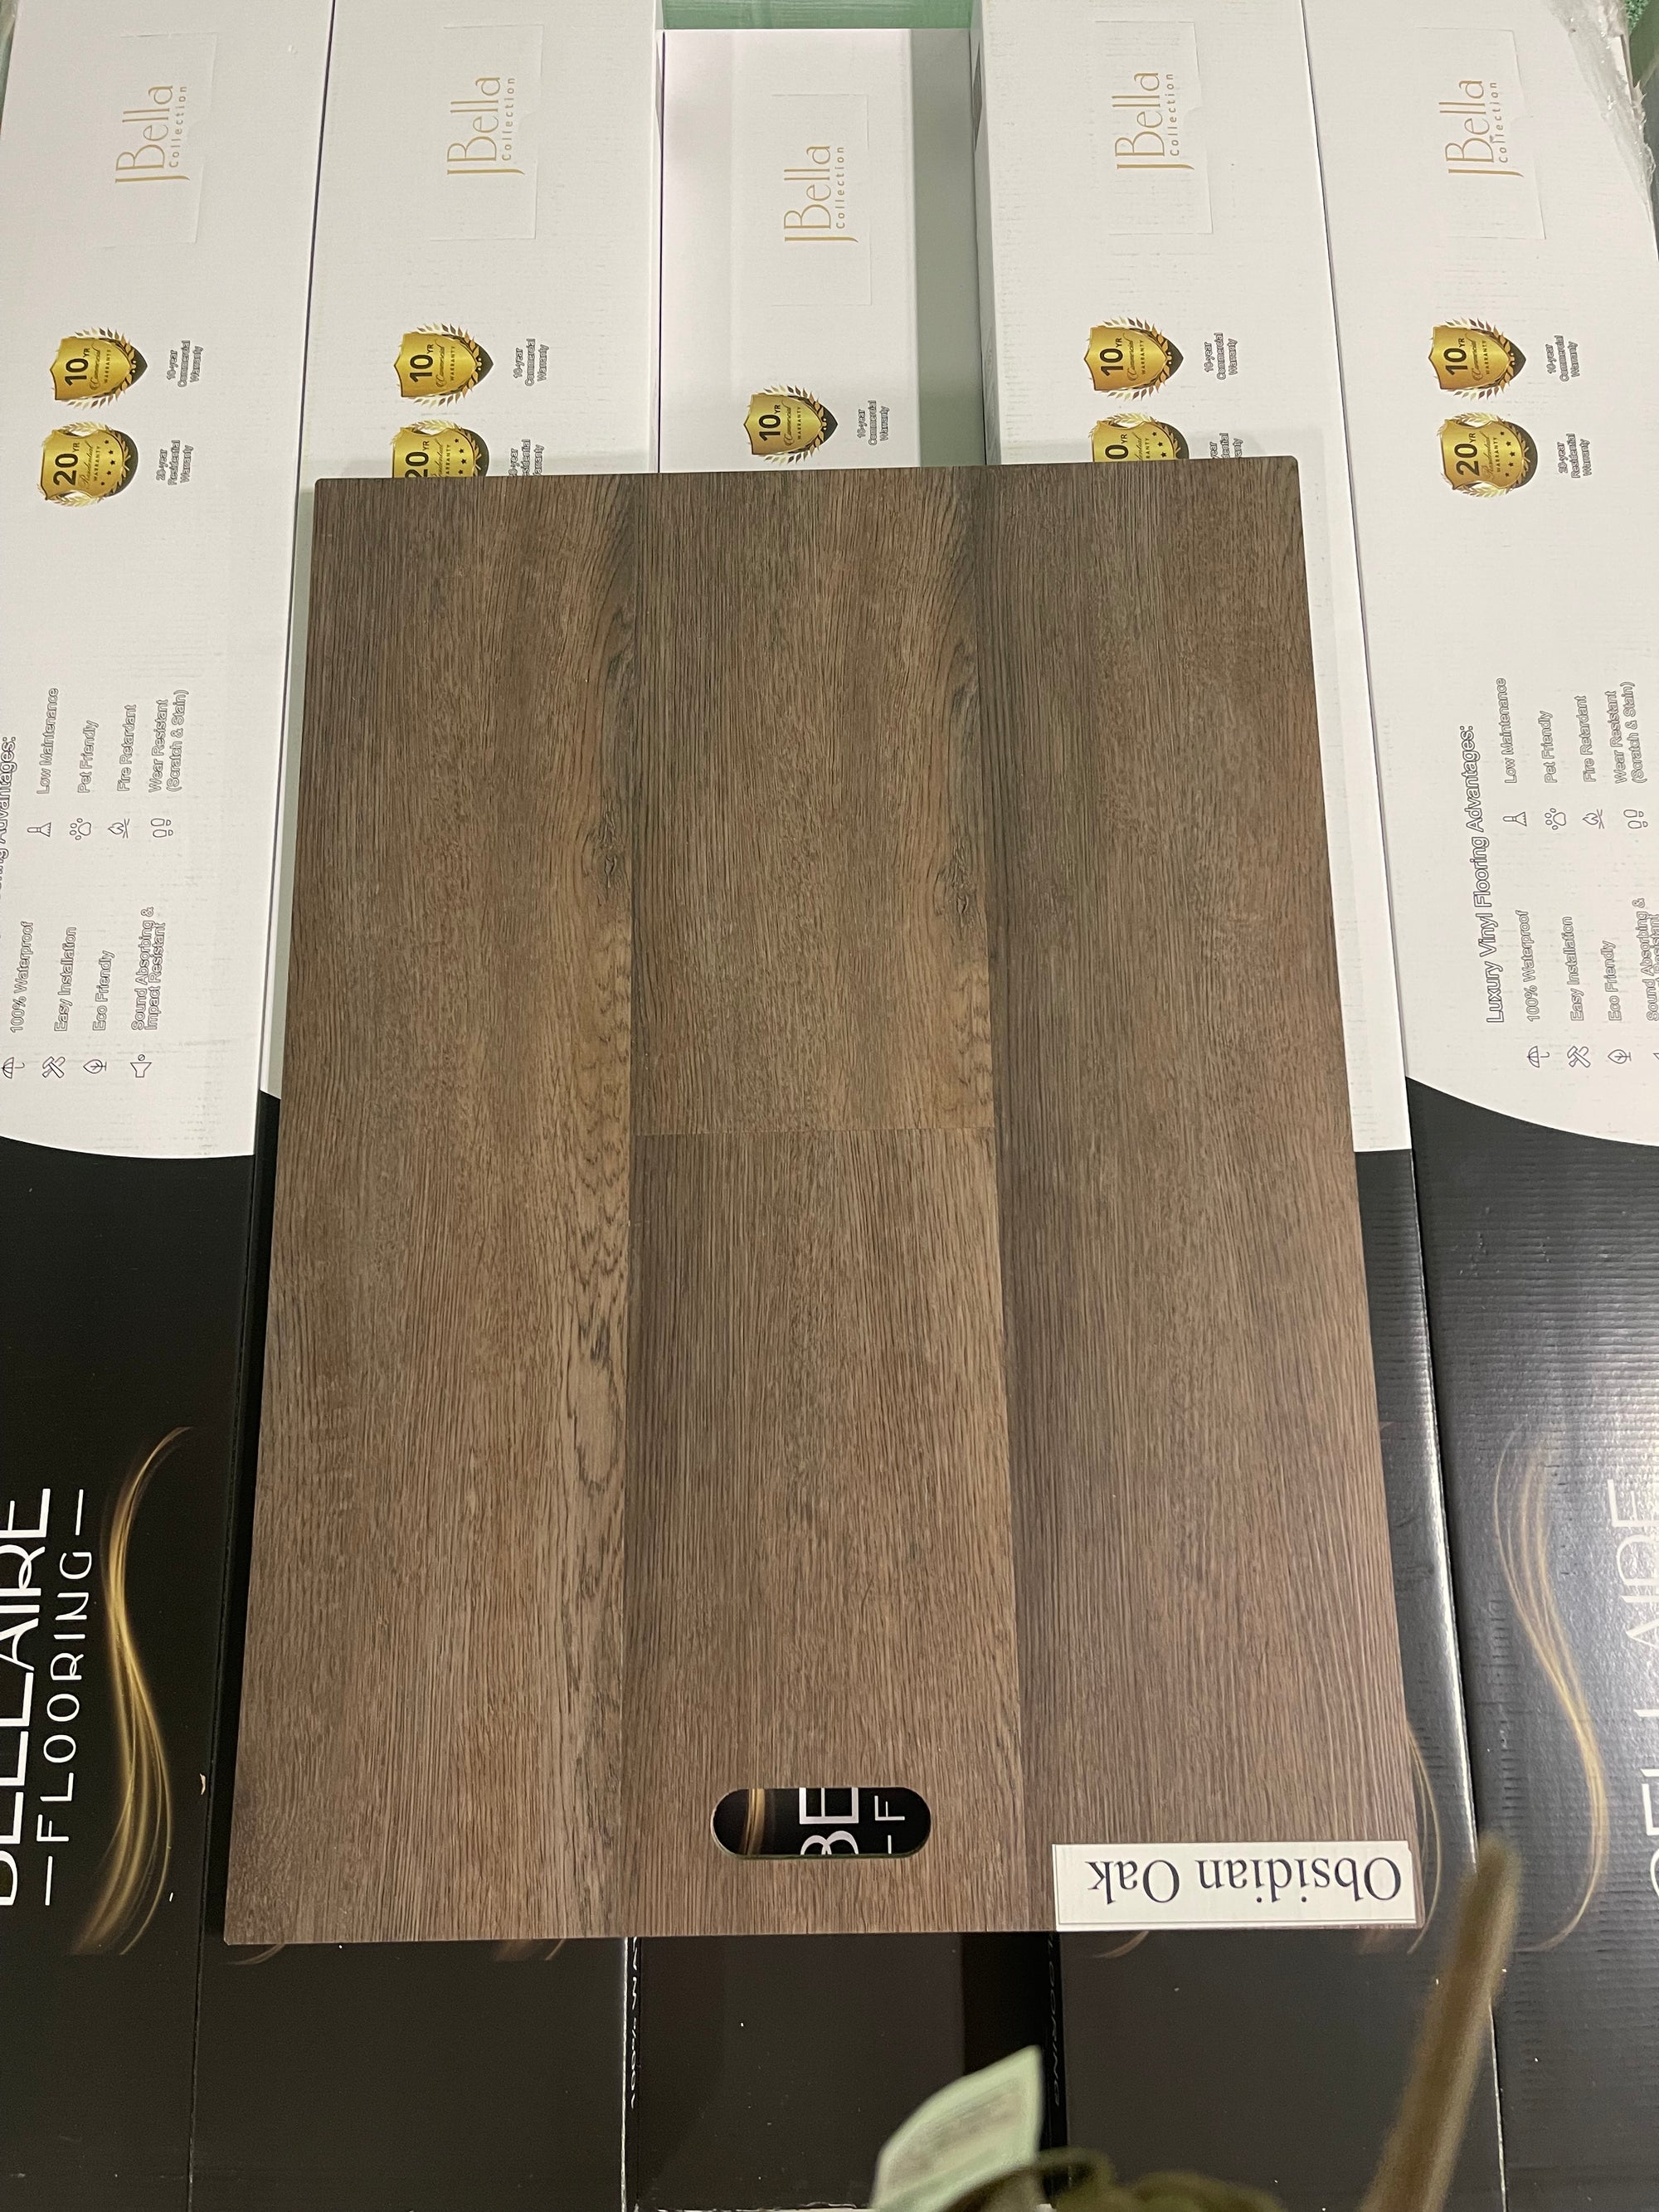 Bellaire 12 mil Luxury Vinyl Plank Flooring - Obsidian Oak $1.99/sqft